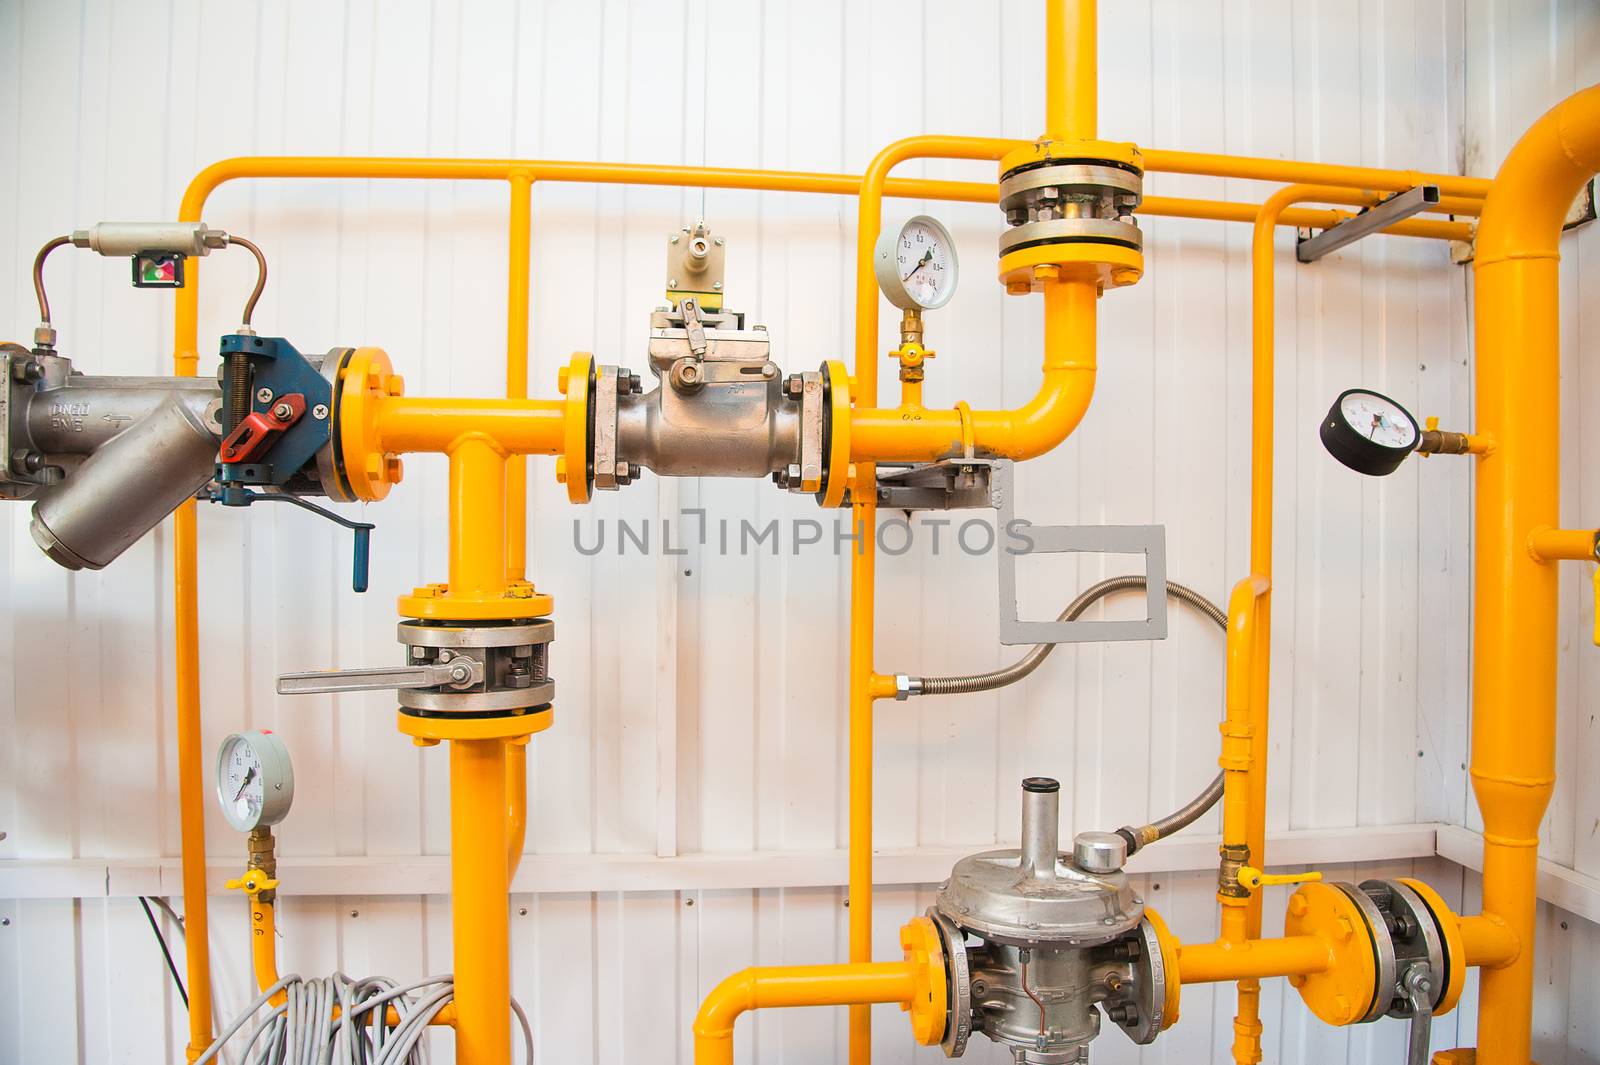 Modern boiler room equipment for heating system. Pipelines, water pump, valves, manometers